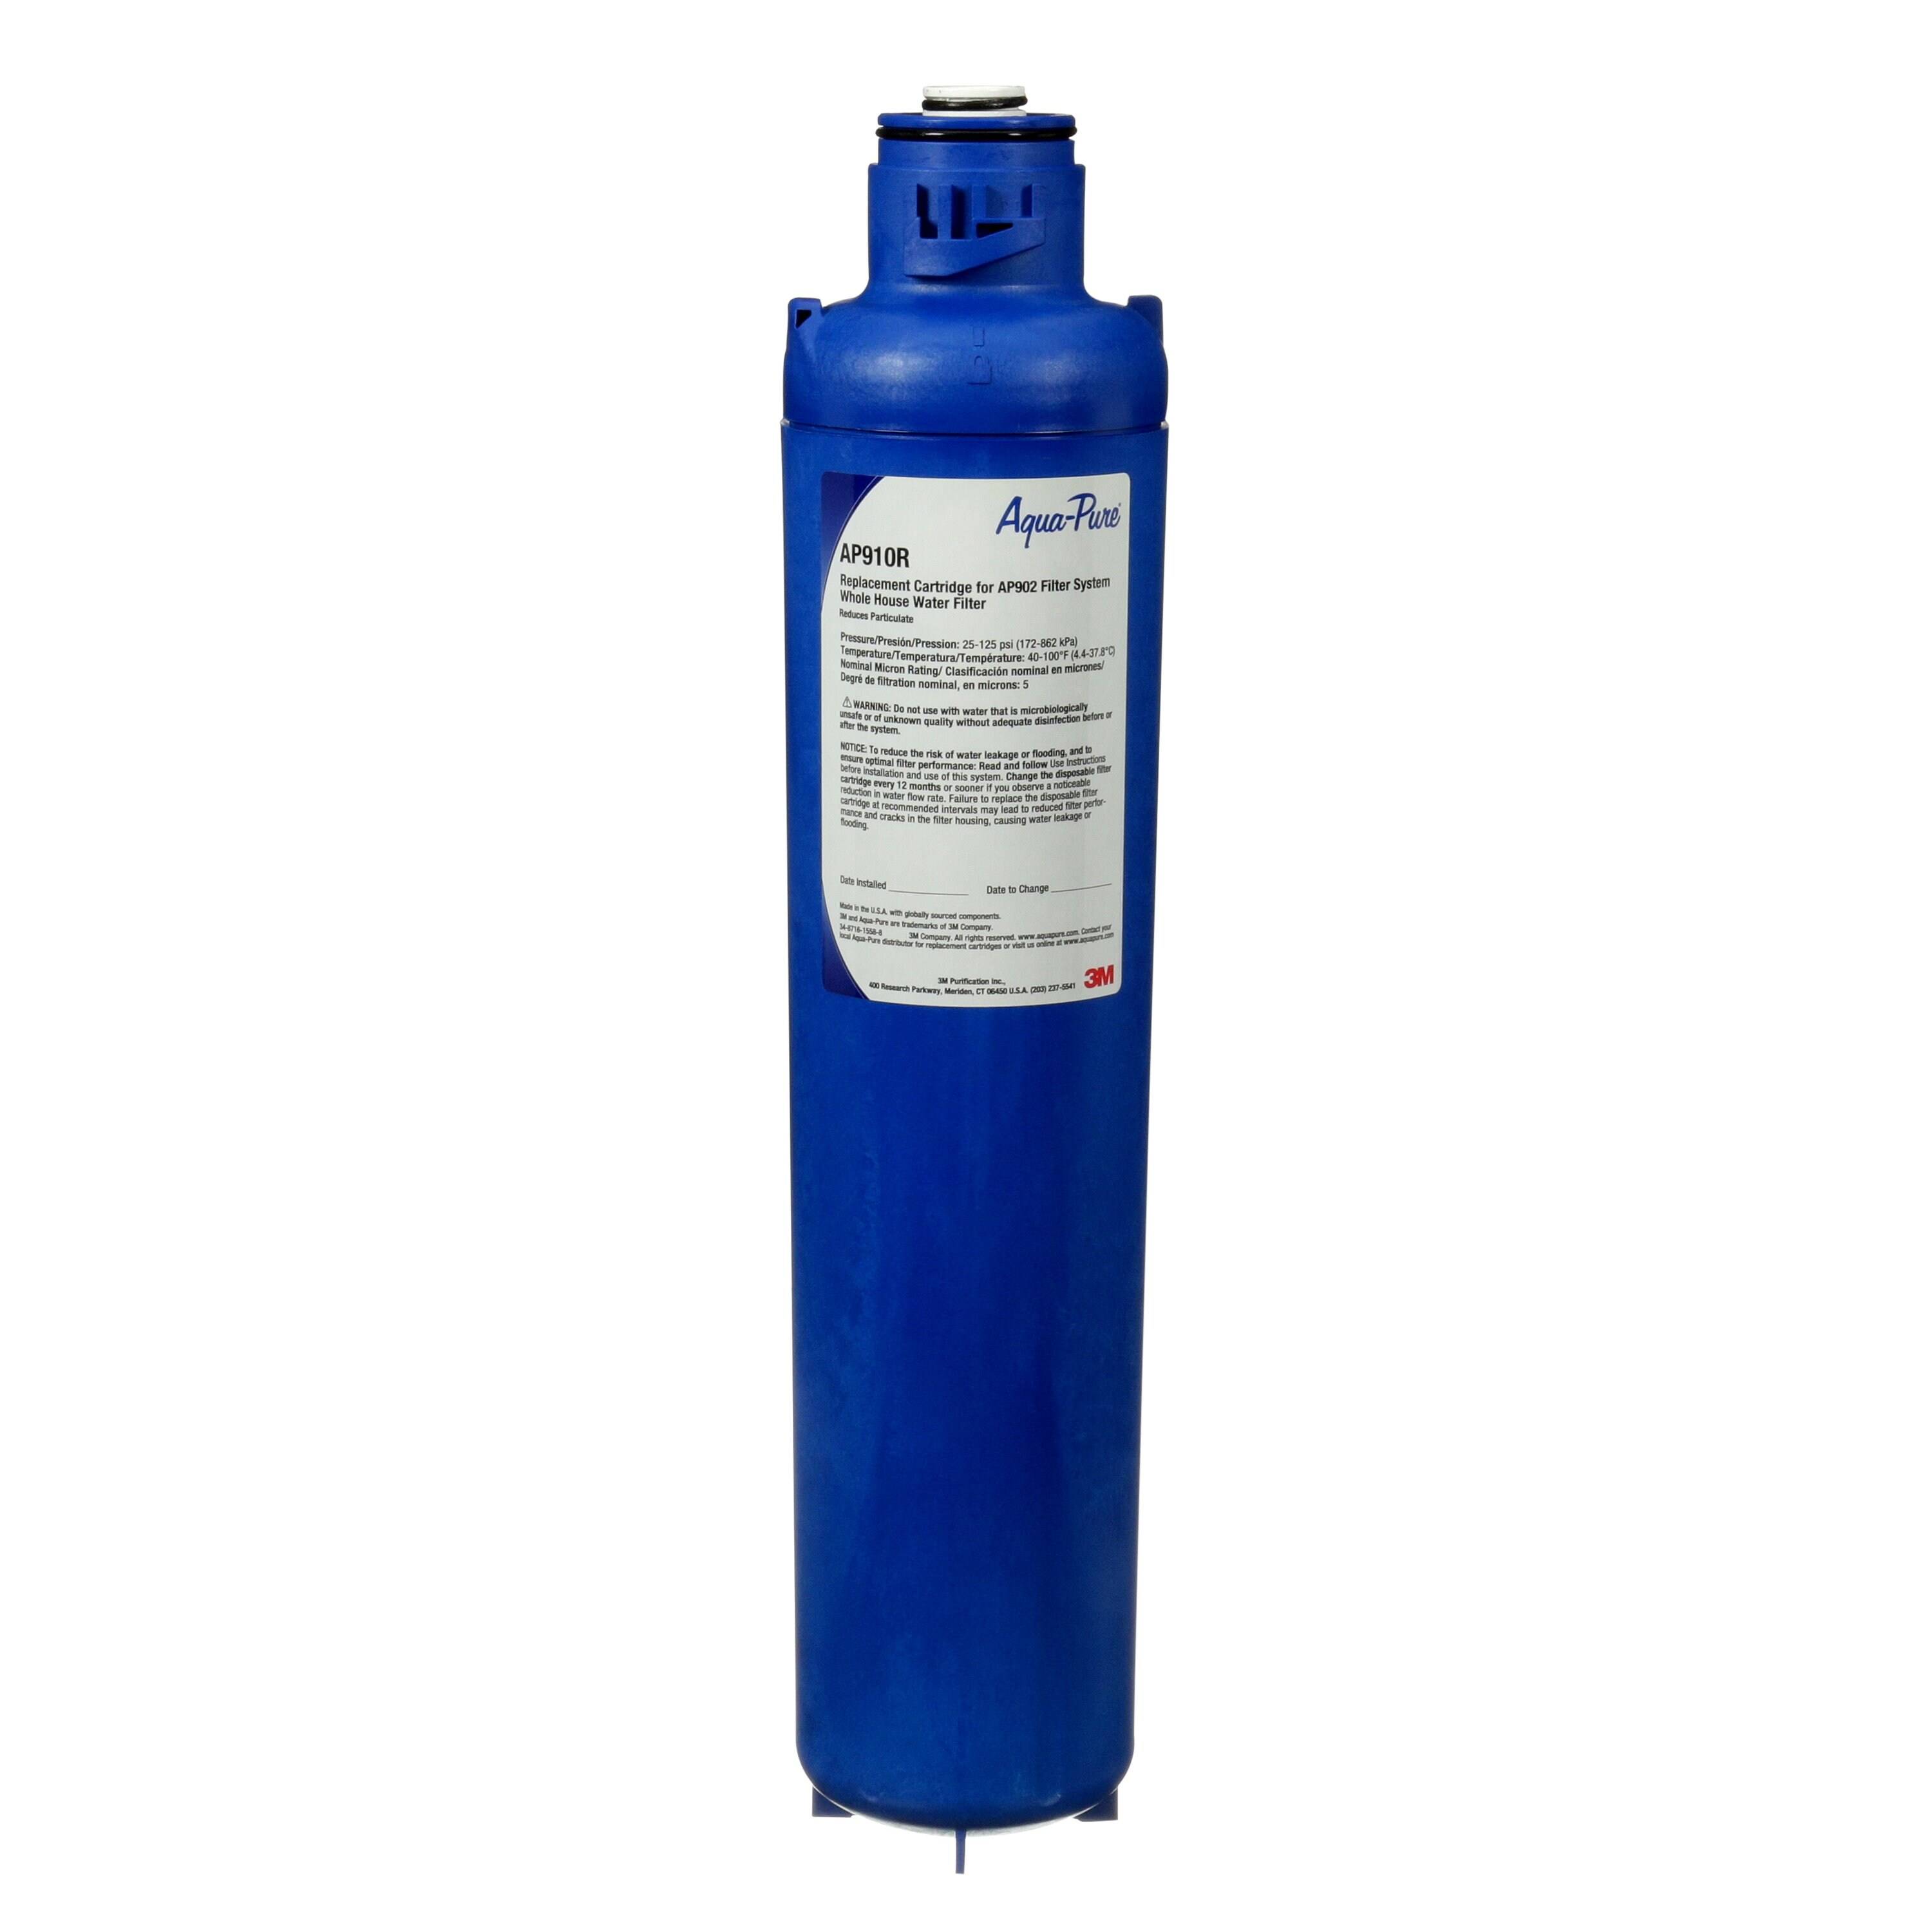 3M Aqua-Pure AP910R Whole House Sanitary Water Filter Cartridge